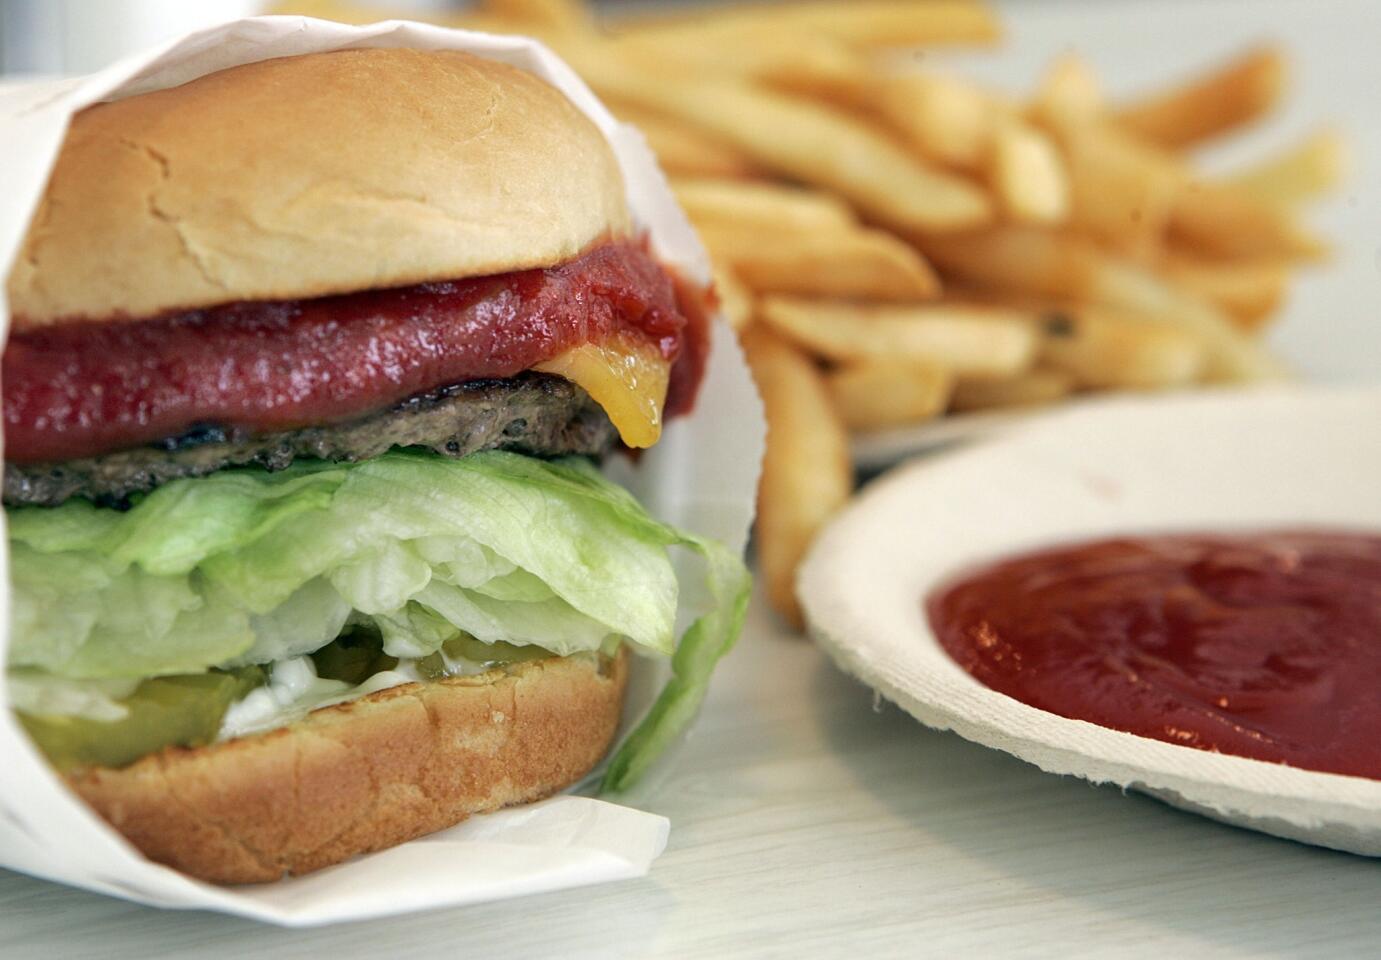 The classic Apple Pan burger.